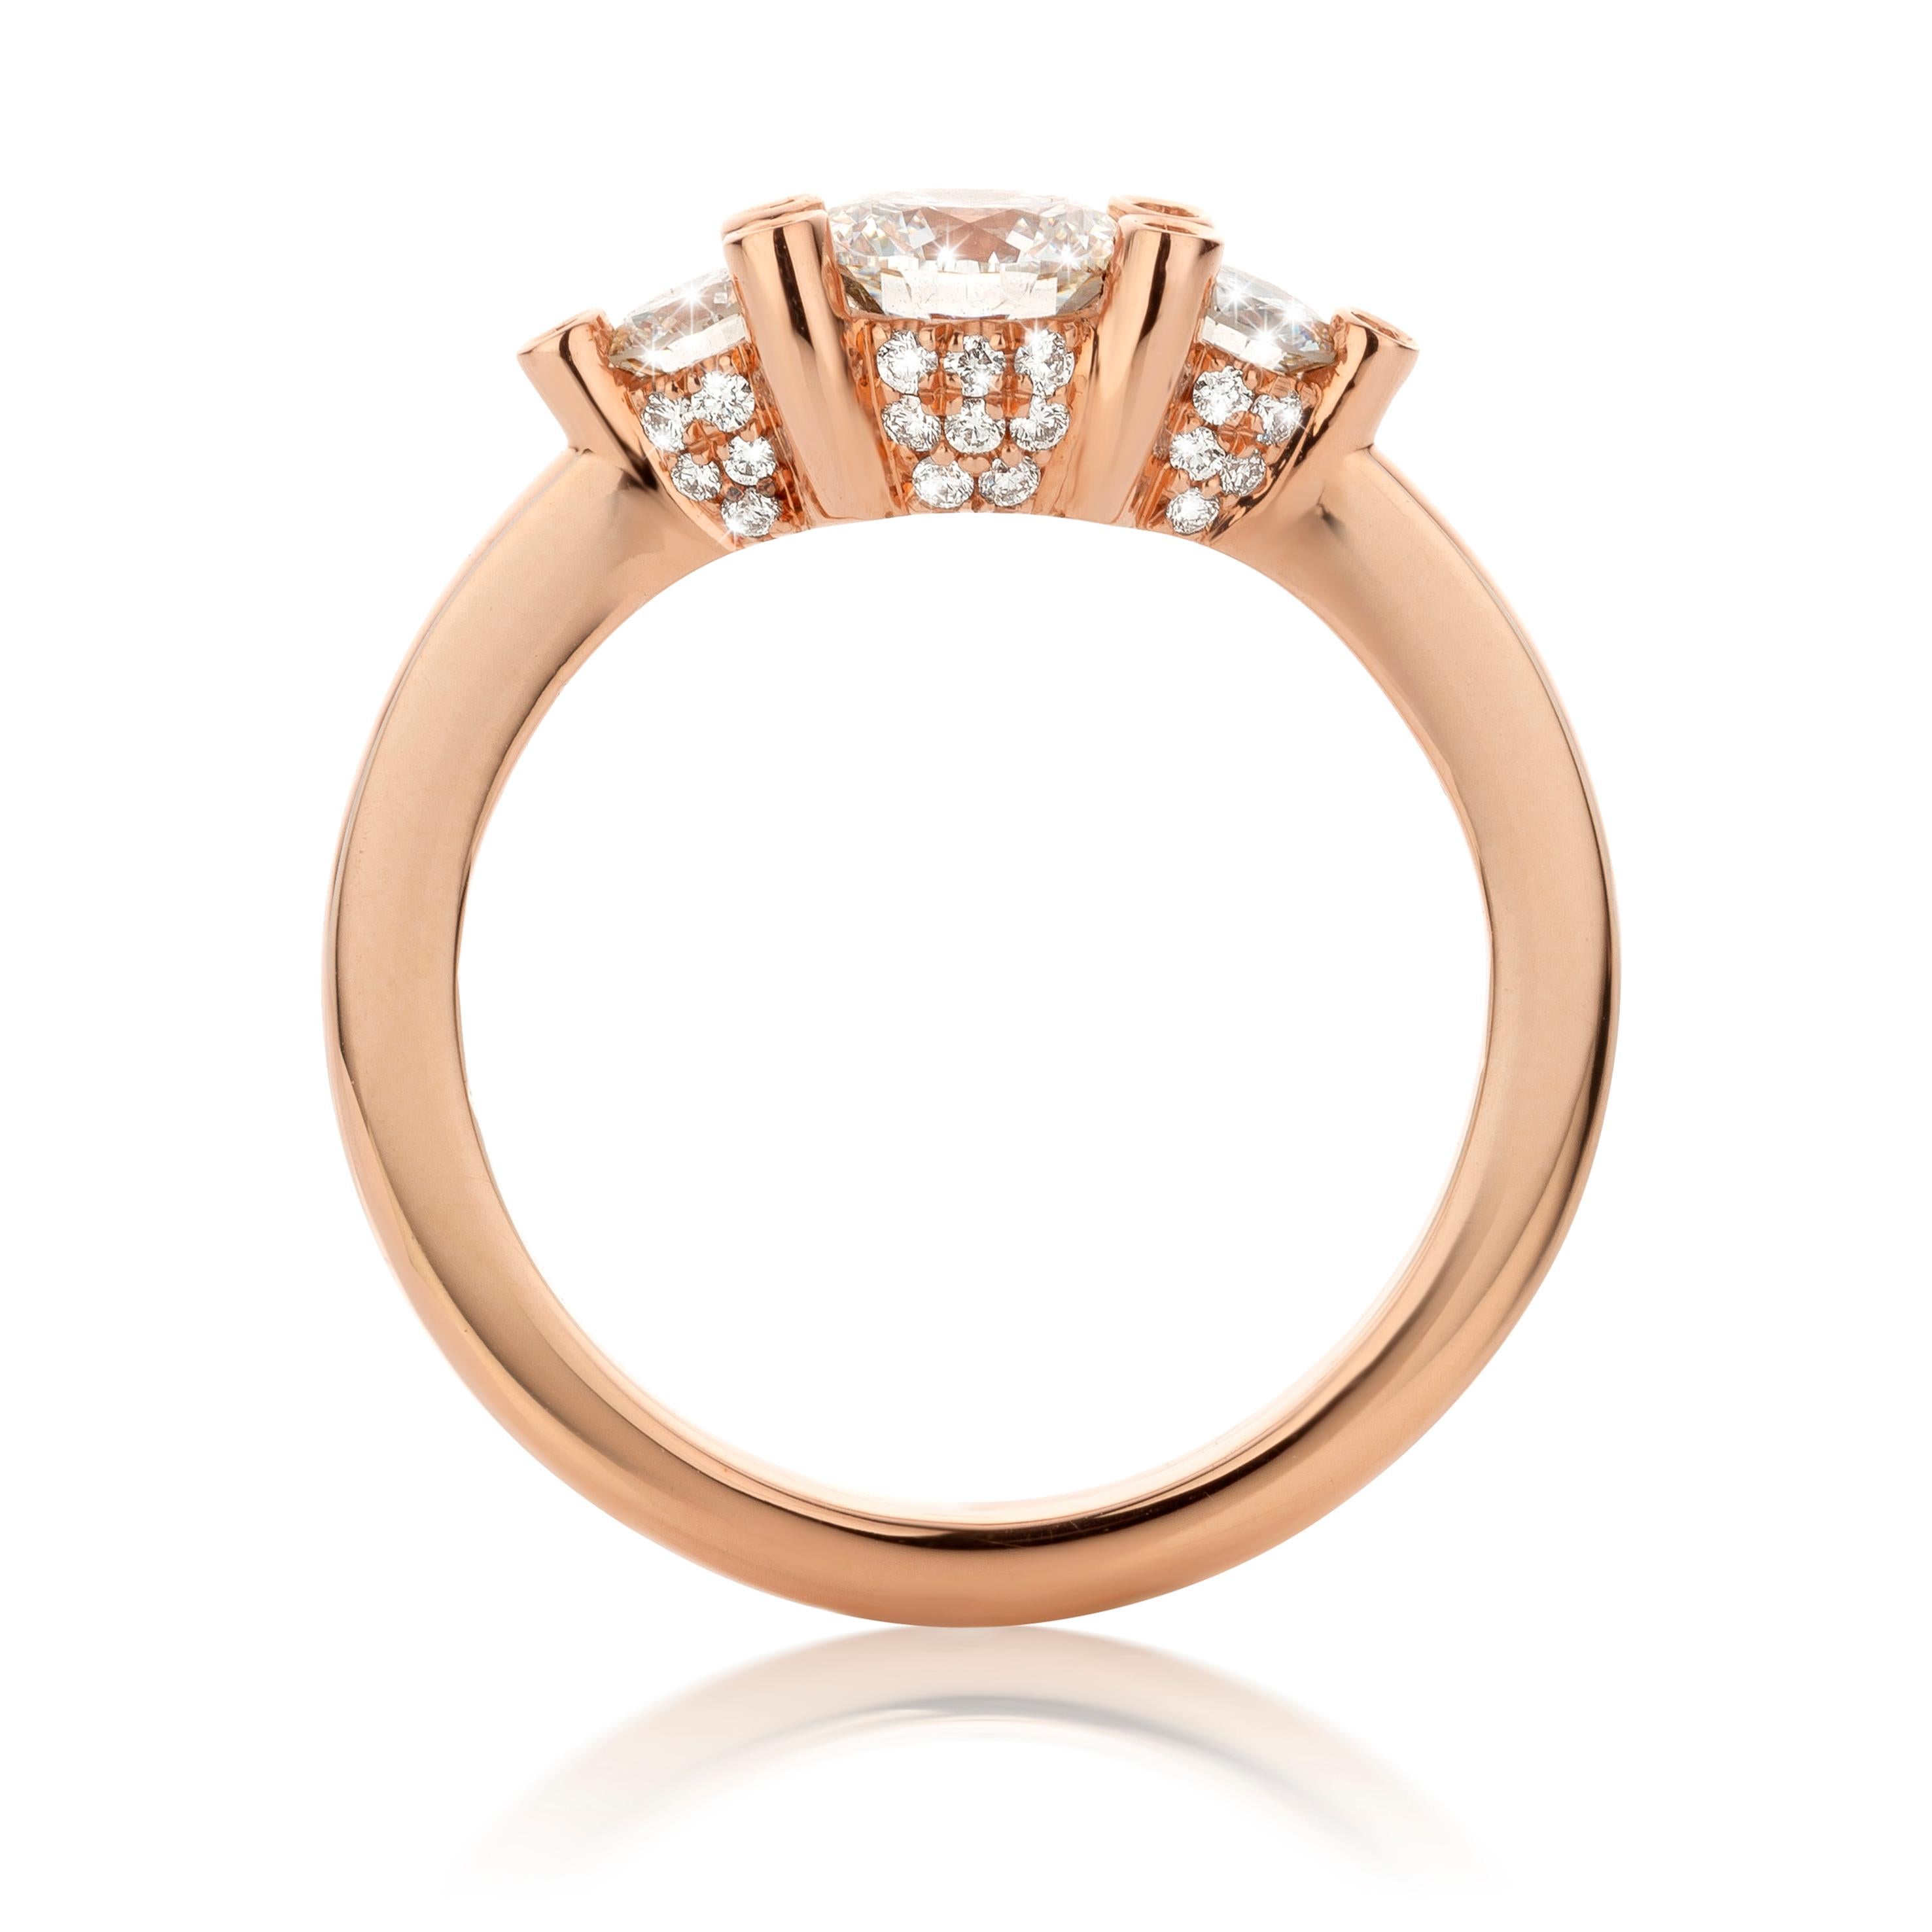 Handmade Three-stone ring in 18K Rose gold 5,6 g. set with a 0,71 carat FSI1 brilliant-cut diamond centerstone and 2 X  0,15 carat FGVS brilliant-cut diamonds:  0,30 carat., 36 X small FGVS brilliant-cut diamonds on the side : 0,17 ct.  Total carat